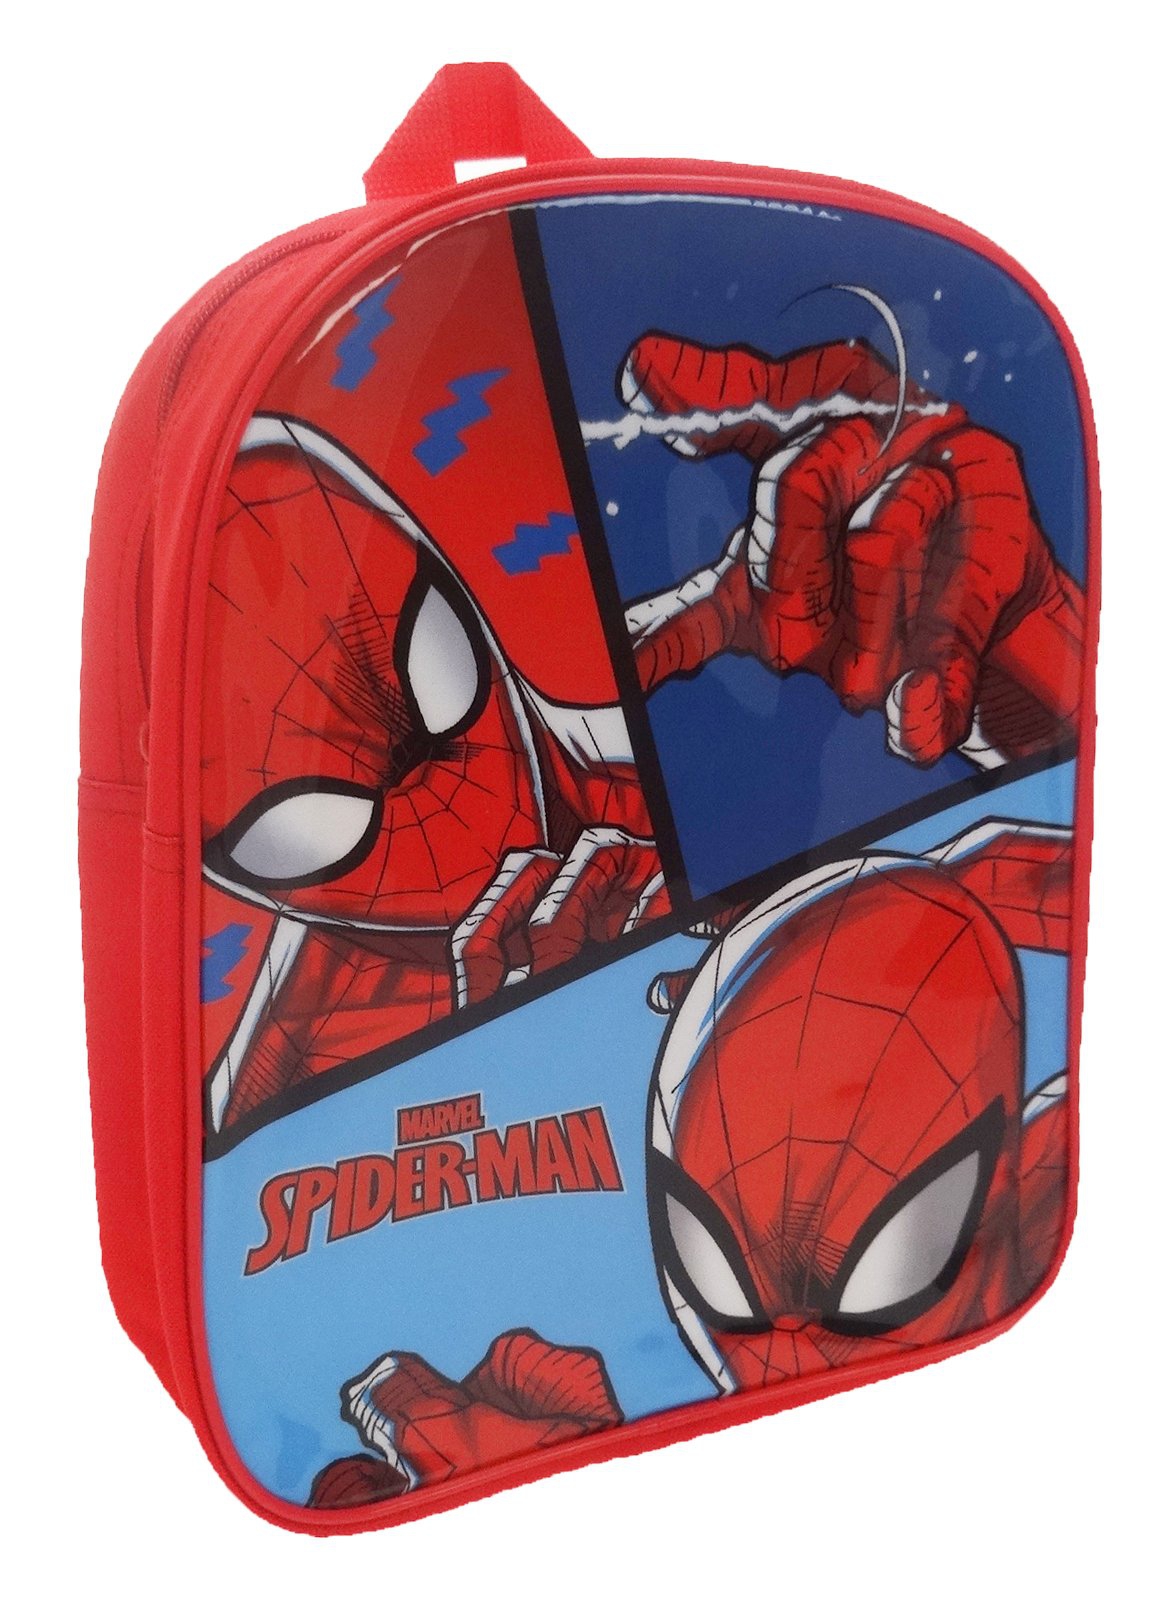 Spiderman 'Abstract' Pv School Bag Rucksack Backpack